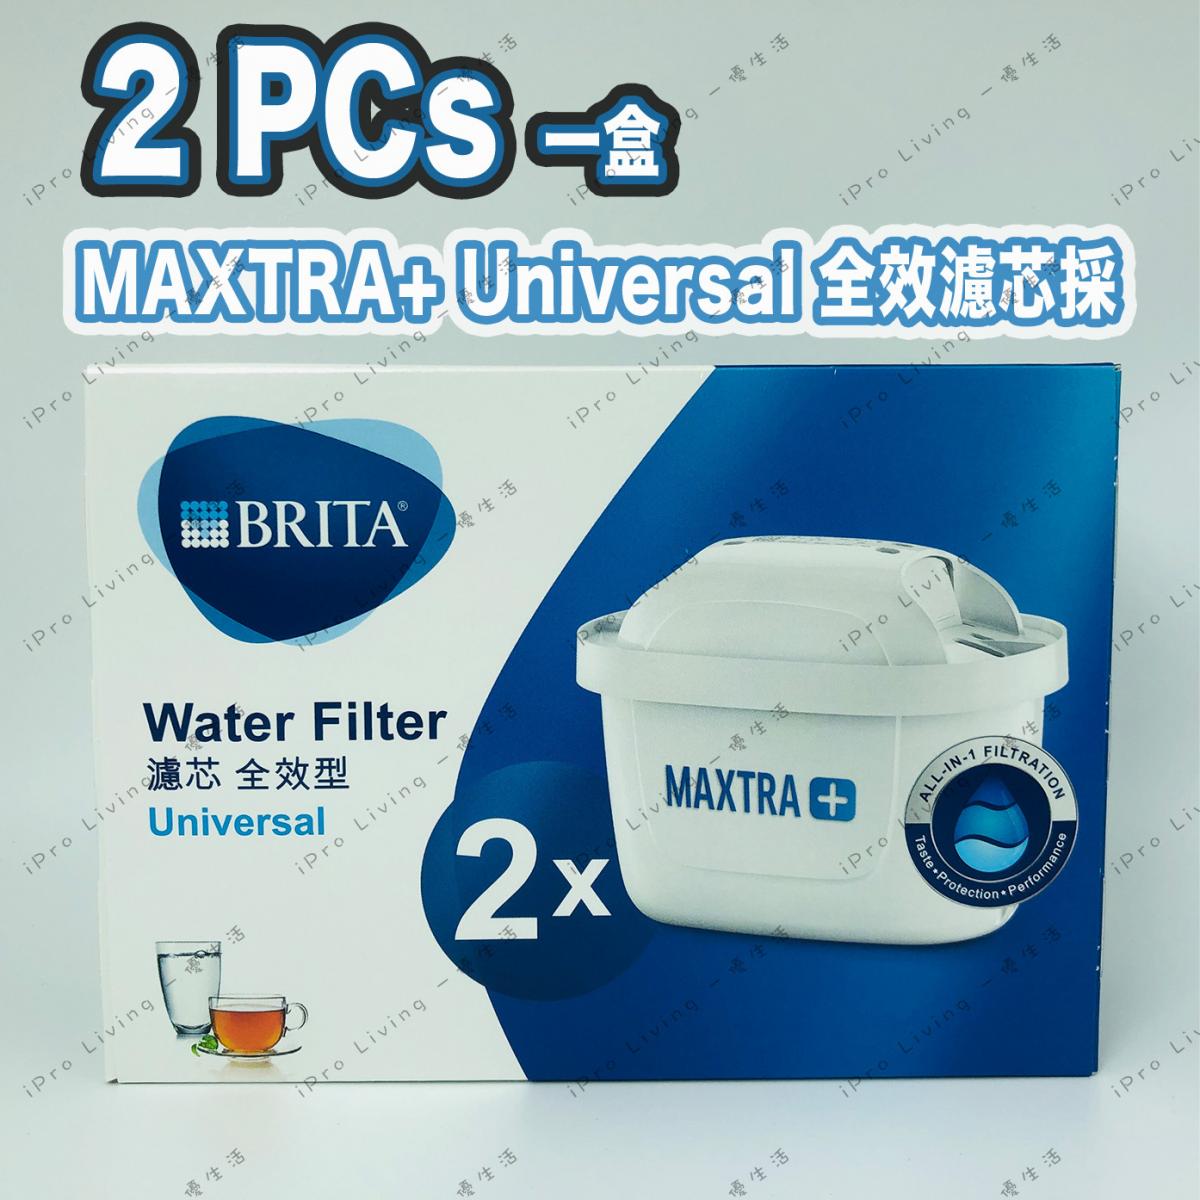 MAXTRA+ Universal Filter 德國製造 (Pack 2)